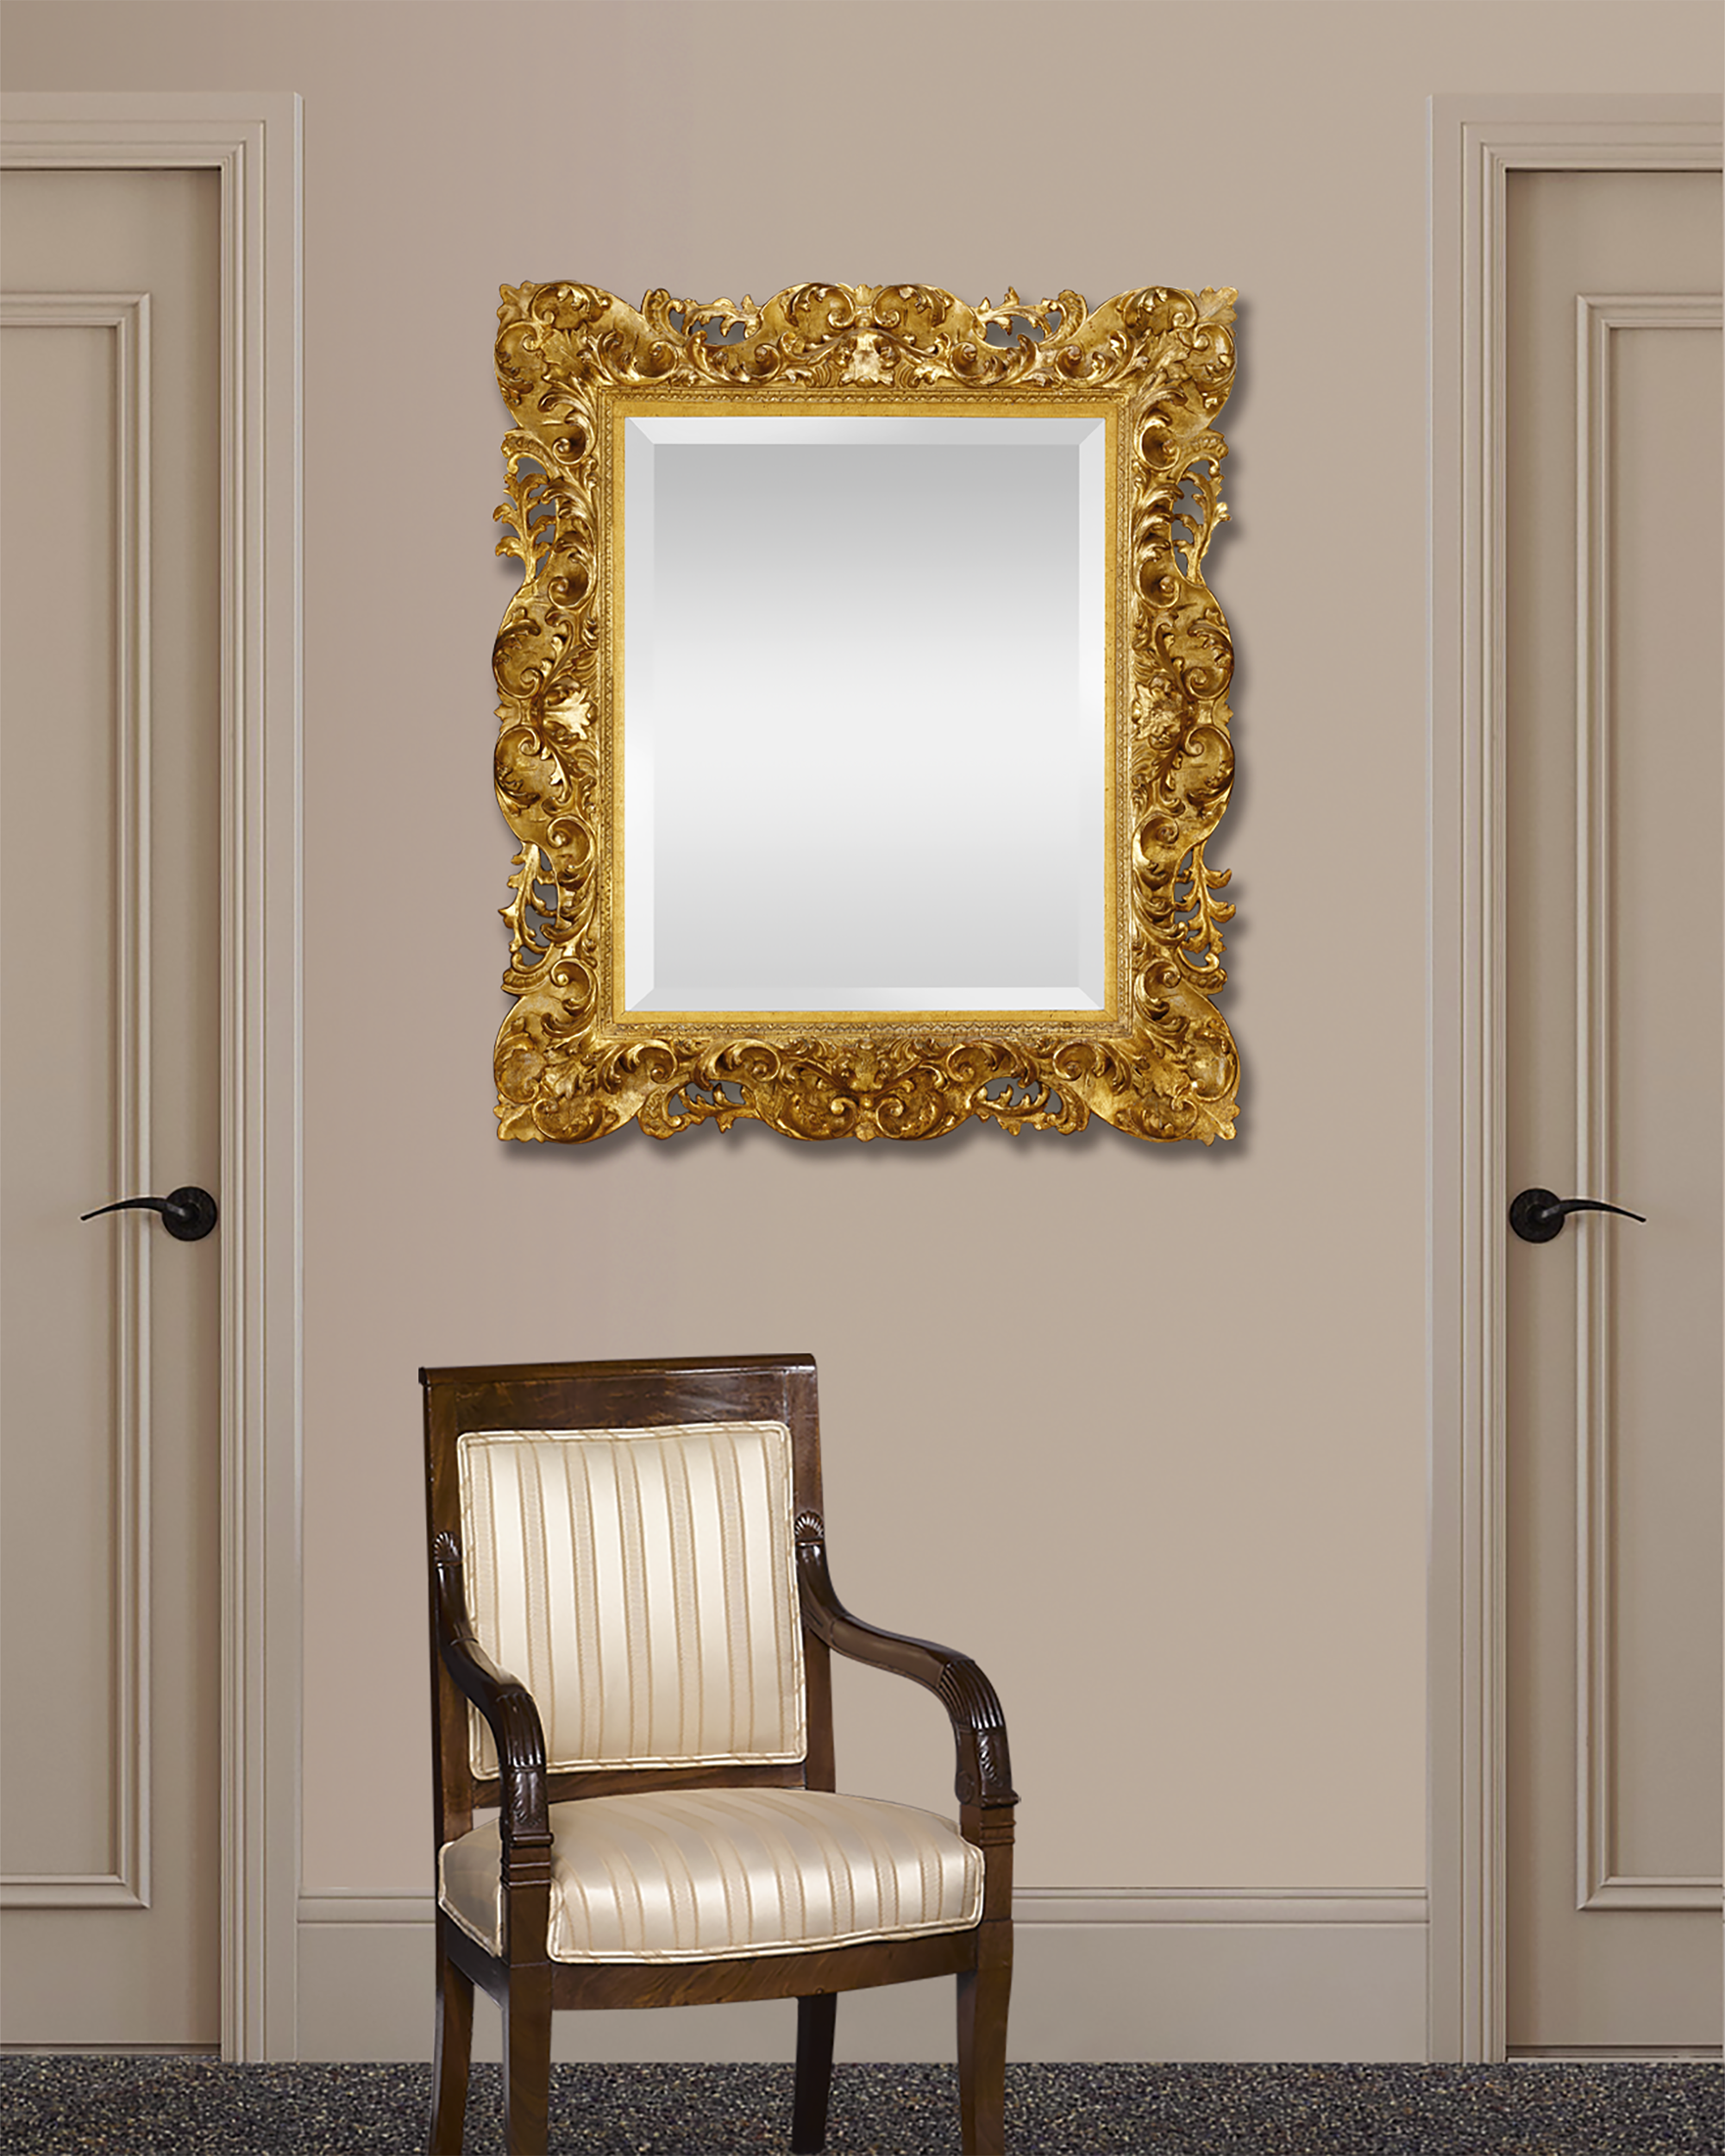 19th-Century Italian Giltwood Mirror